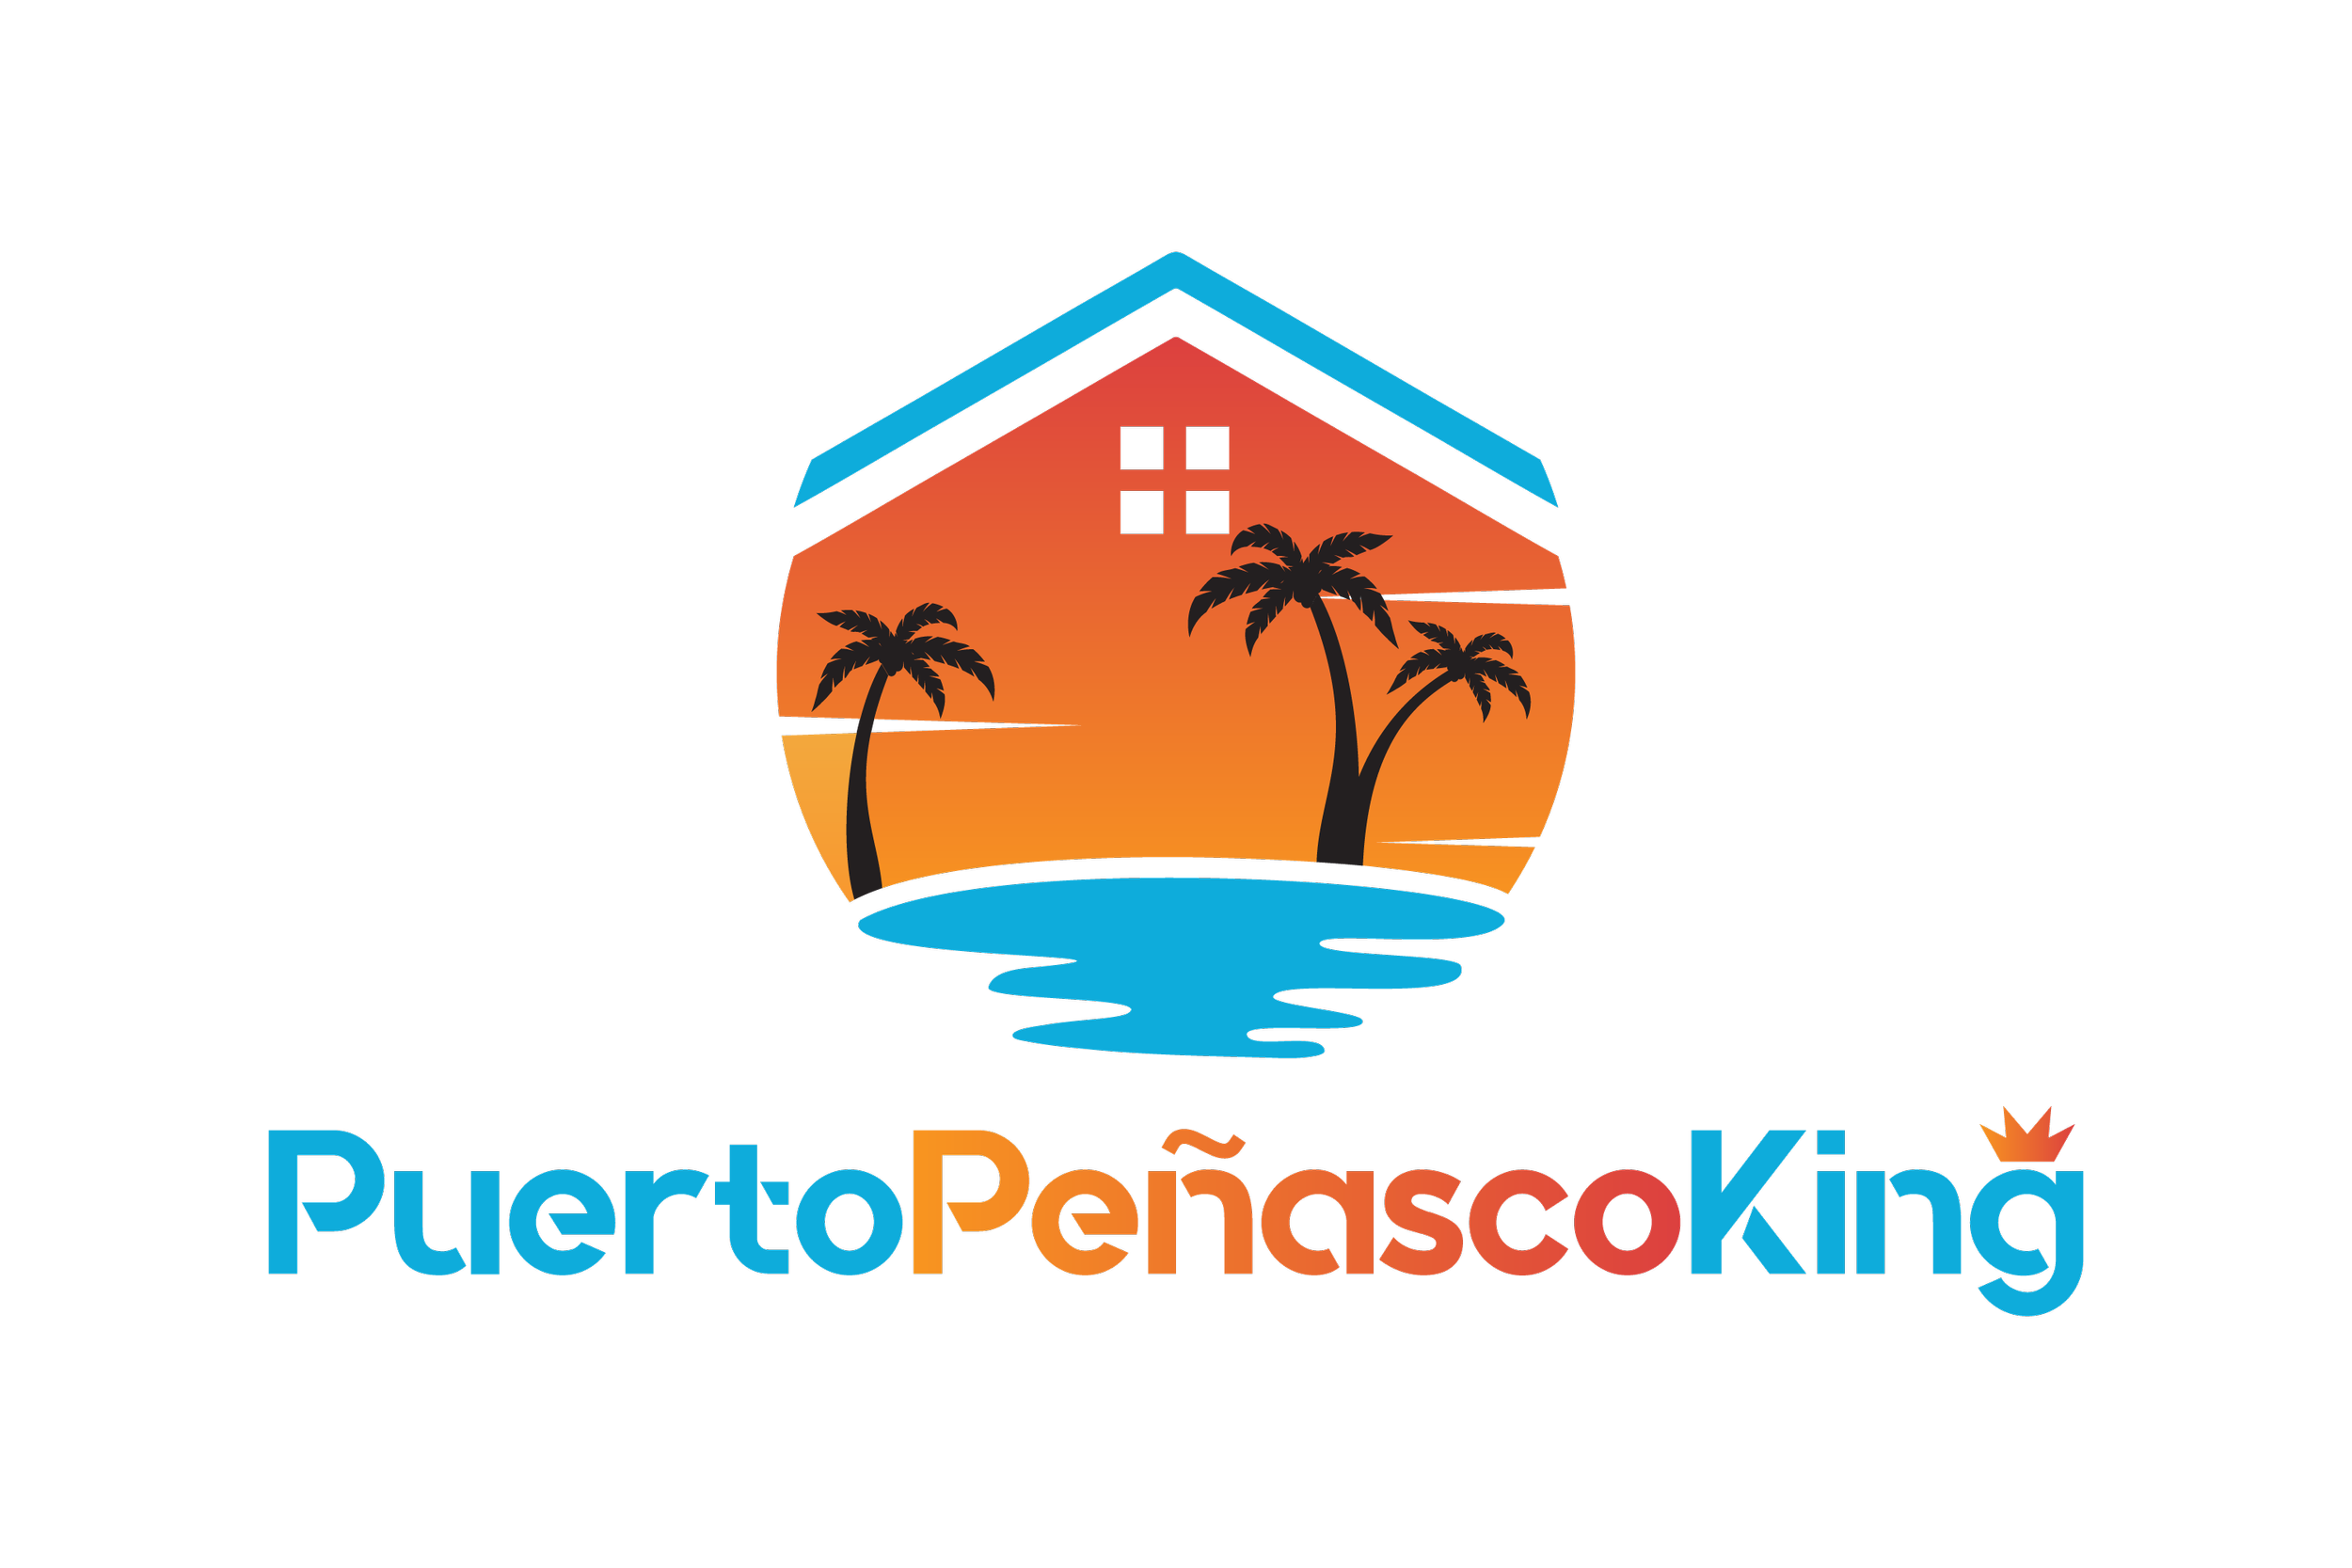 Puerto Penasco King